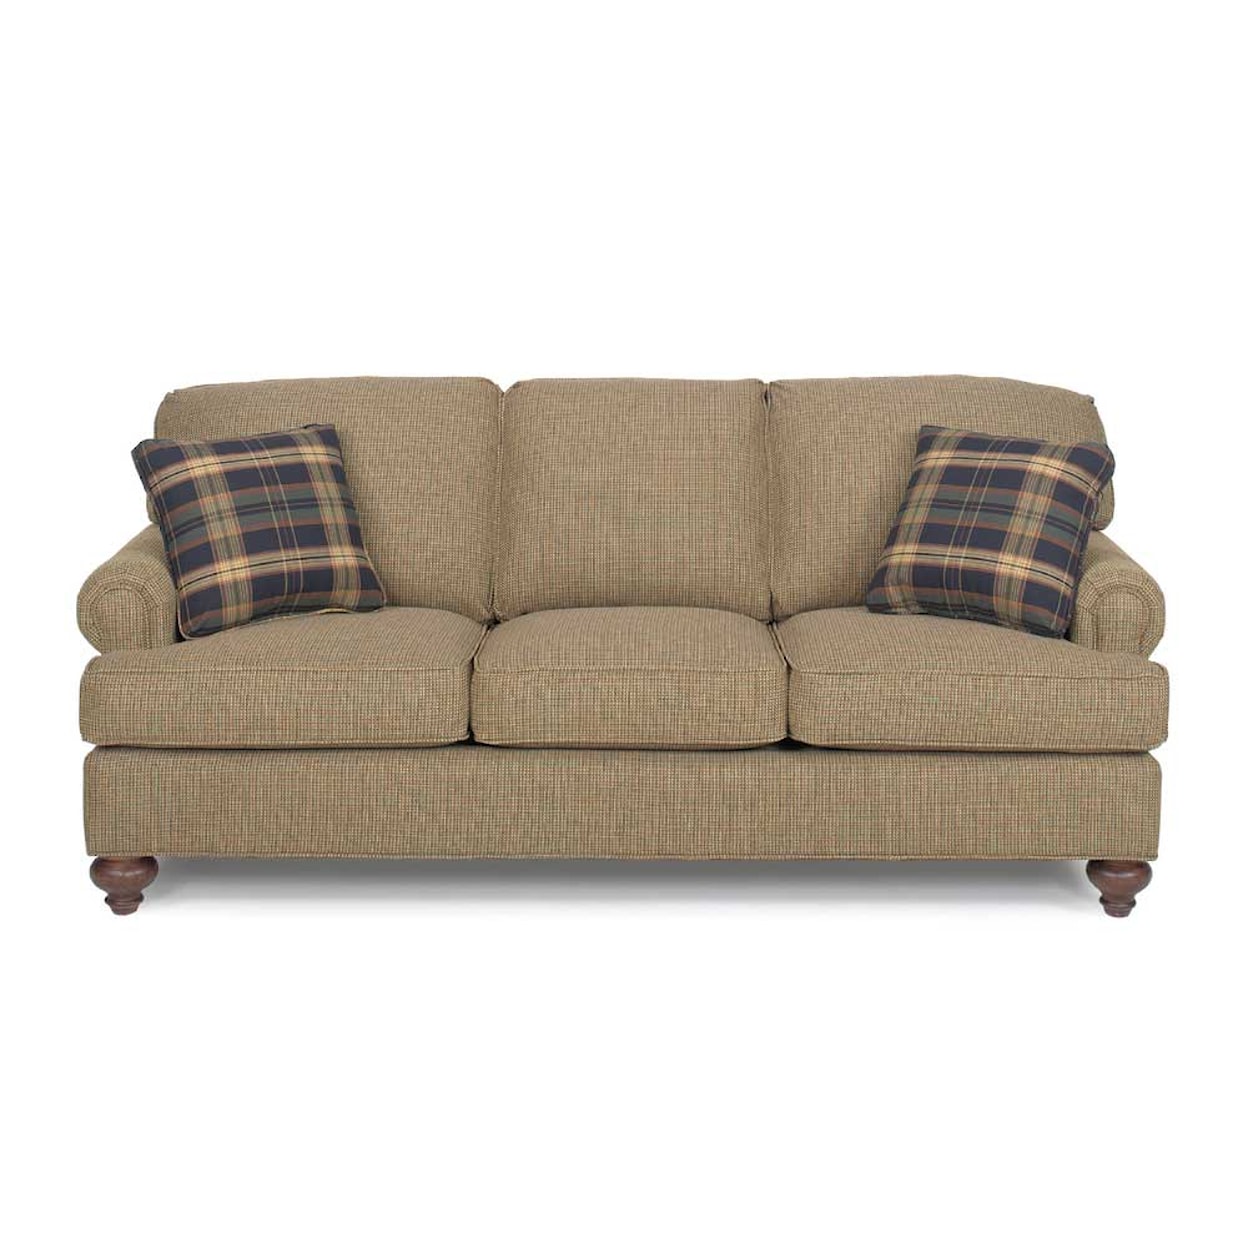 Norwalk Quincy Upholstered Sofa